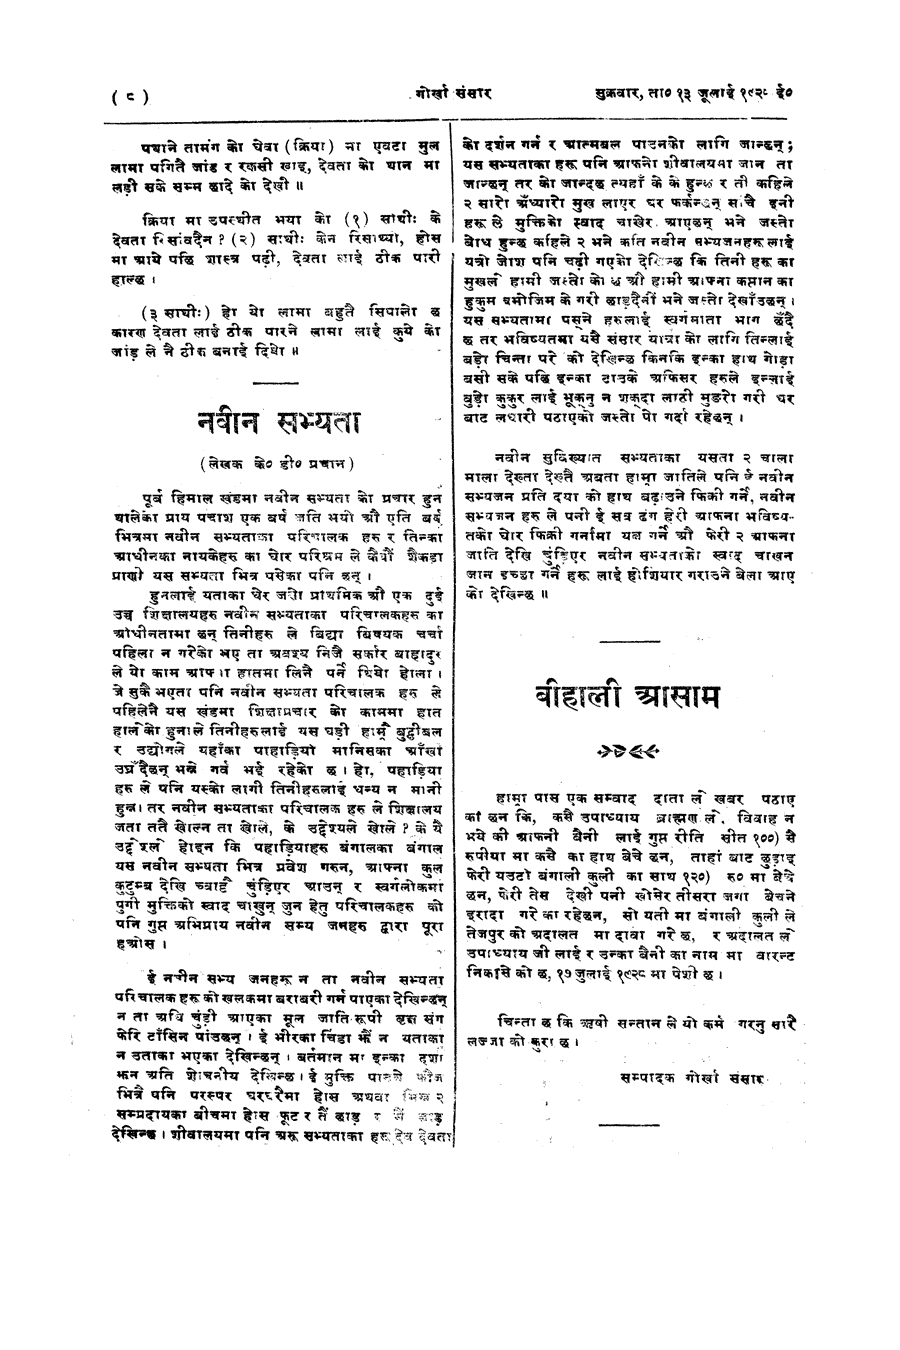 Gorkha Sansar, 13 July 1928, page 8